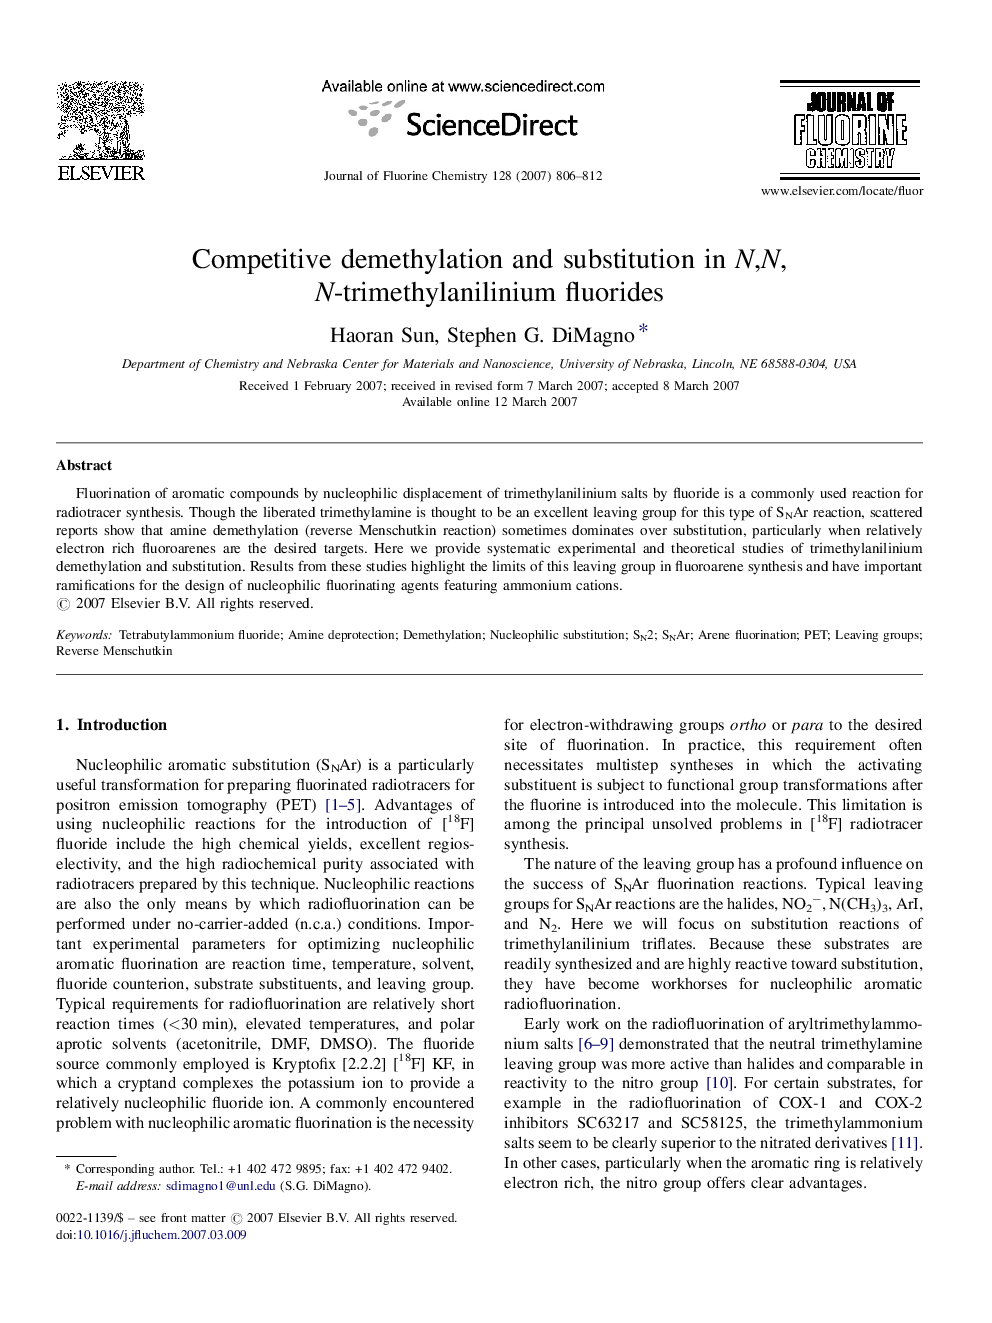 Competitive demethylation and substitution in N,N,N-trimethylanilinium fluorides